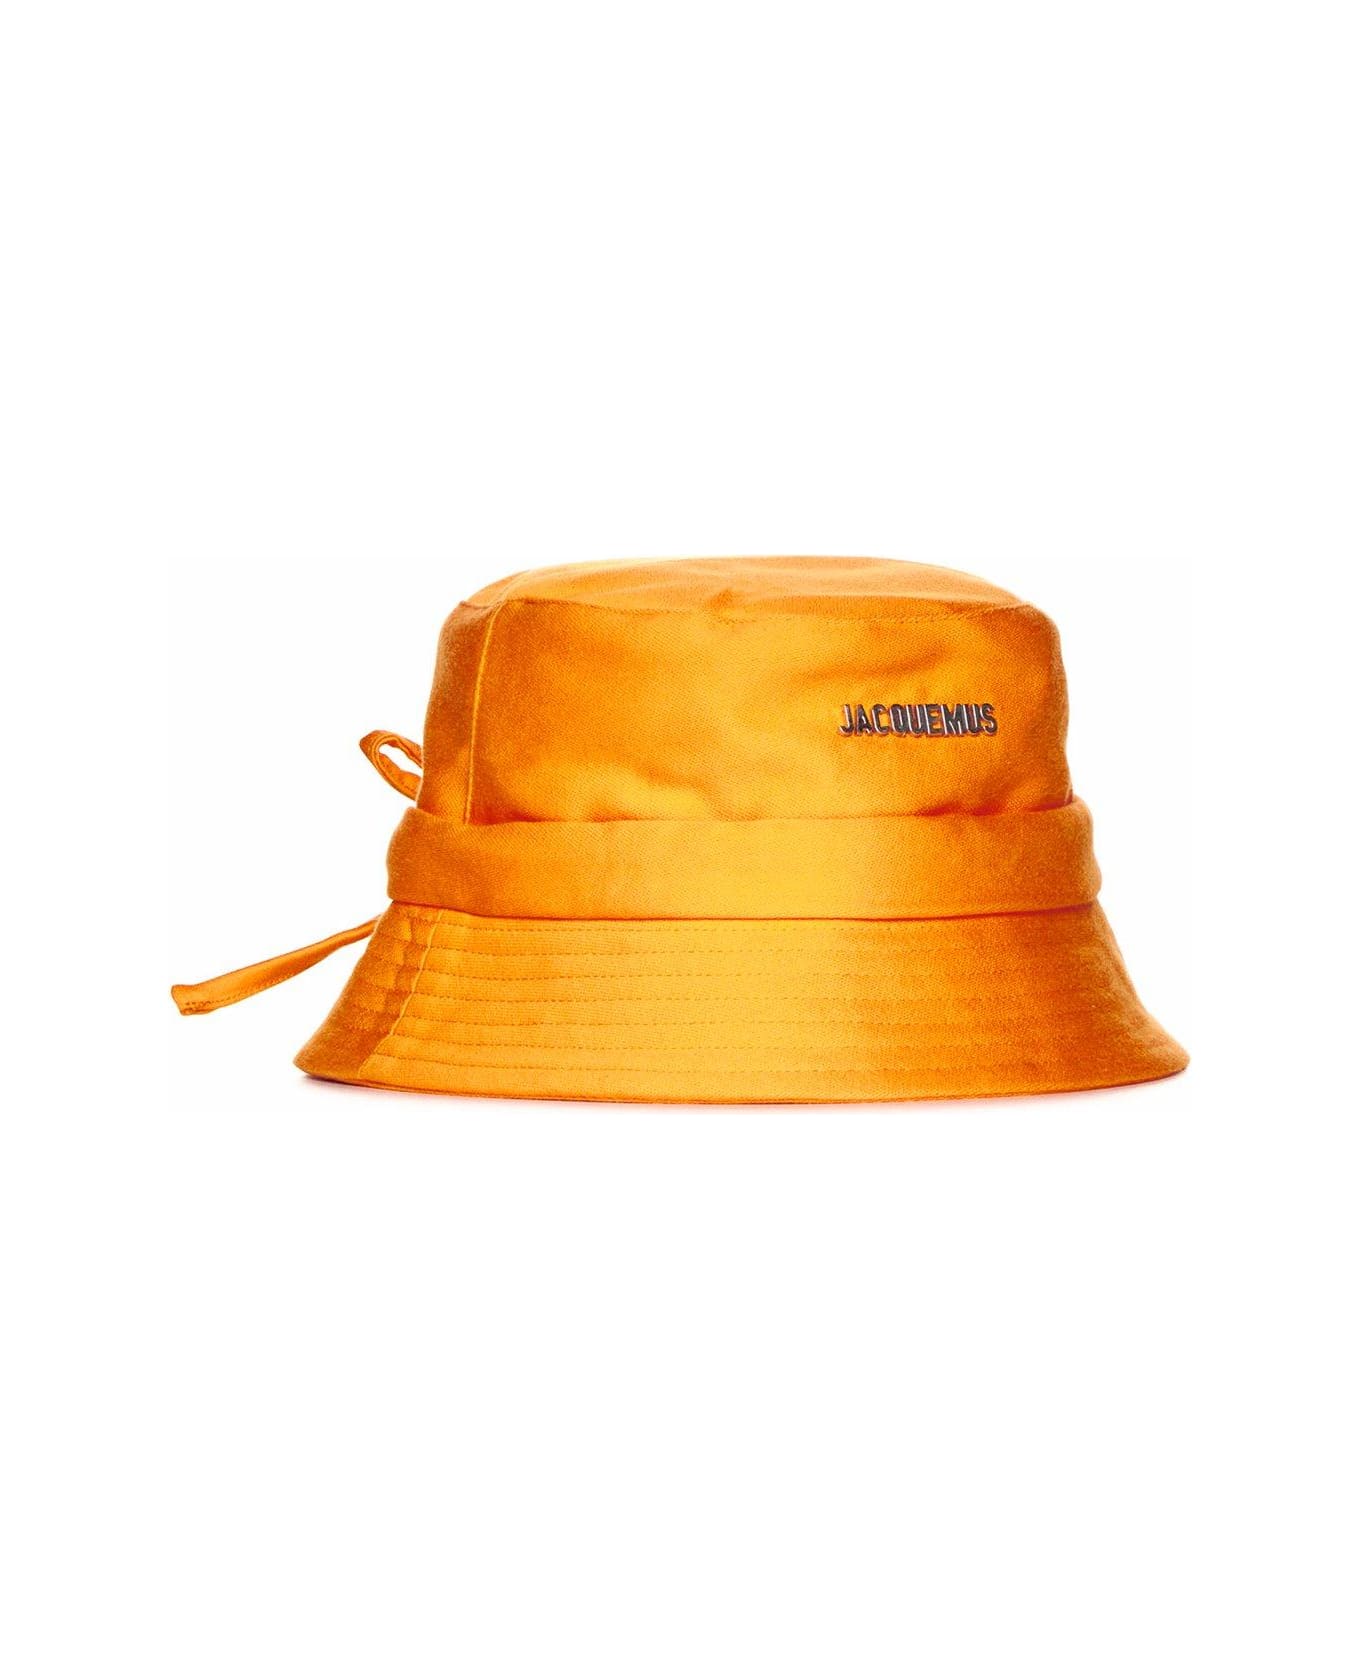 Jacquemus Le Bob Gadjo Knotted Bucket Hat - Dark orange 帽子